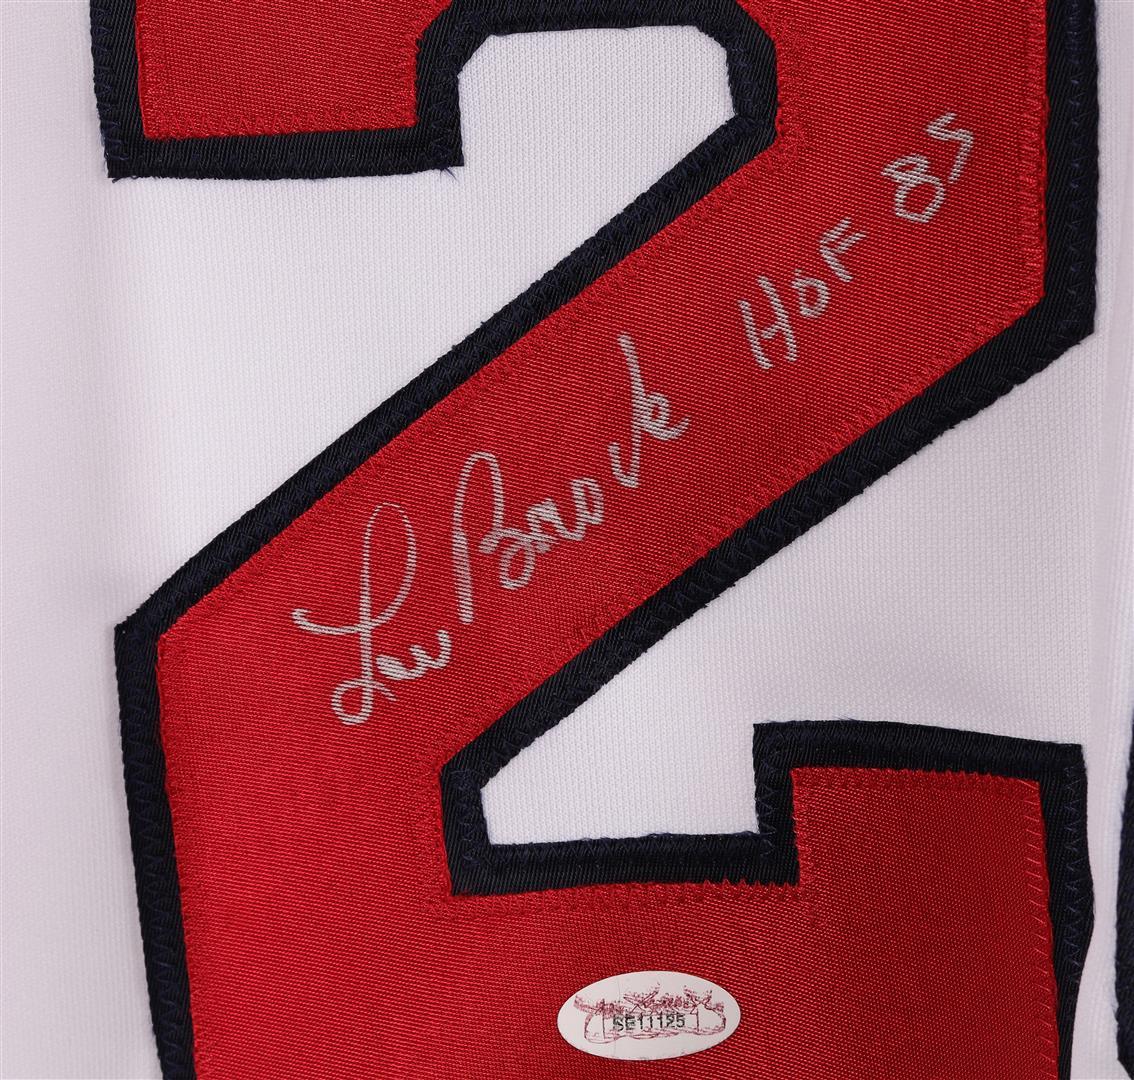 St. Luis Cardinals Lou Brock Autographed Jersey